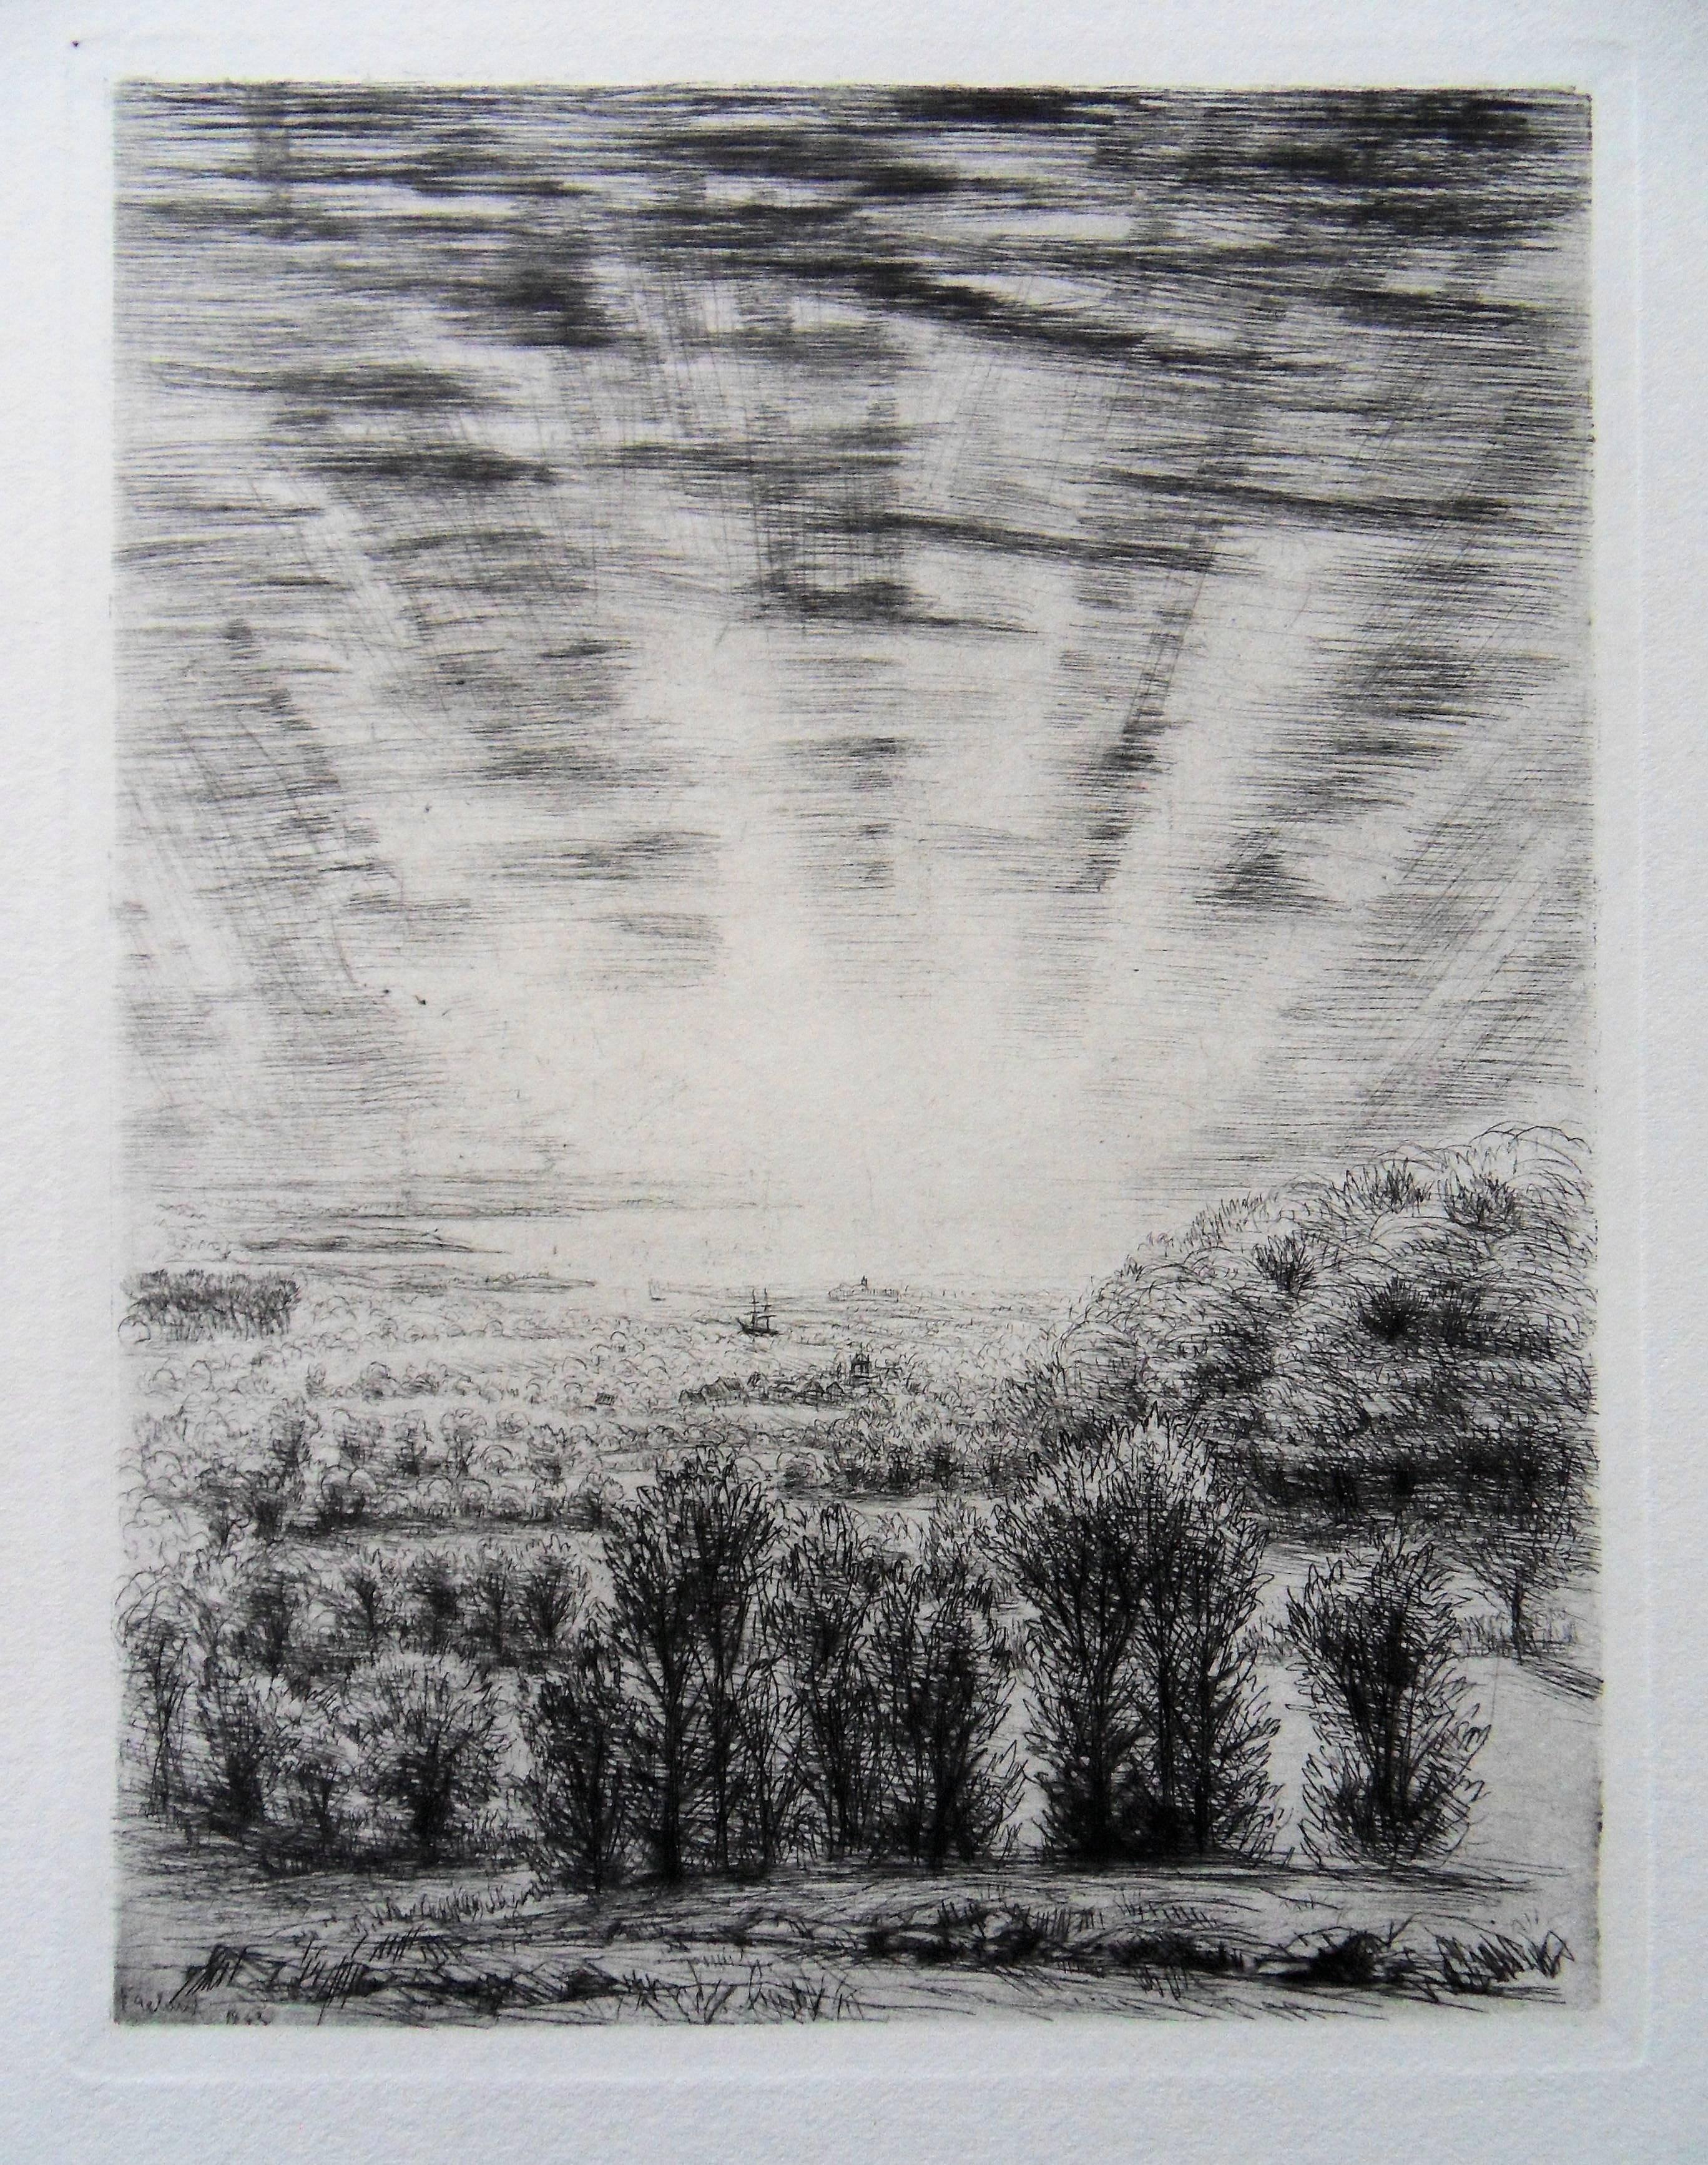 Jean Frélaut Landscape Print - Superlative Sunrise - Original etching, 1943